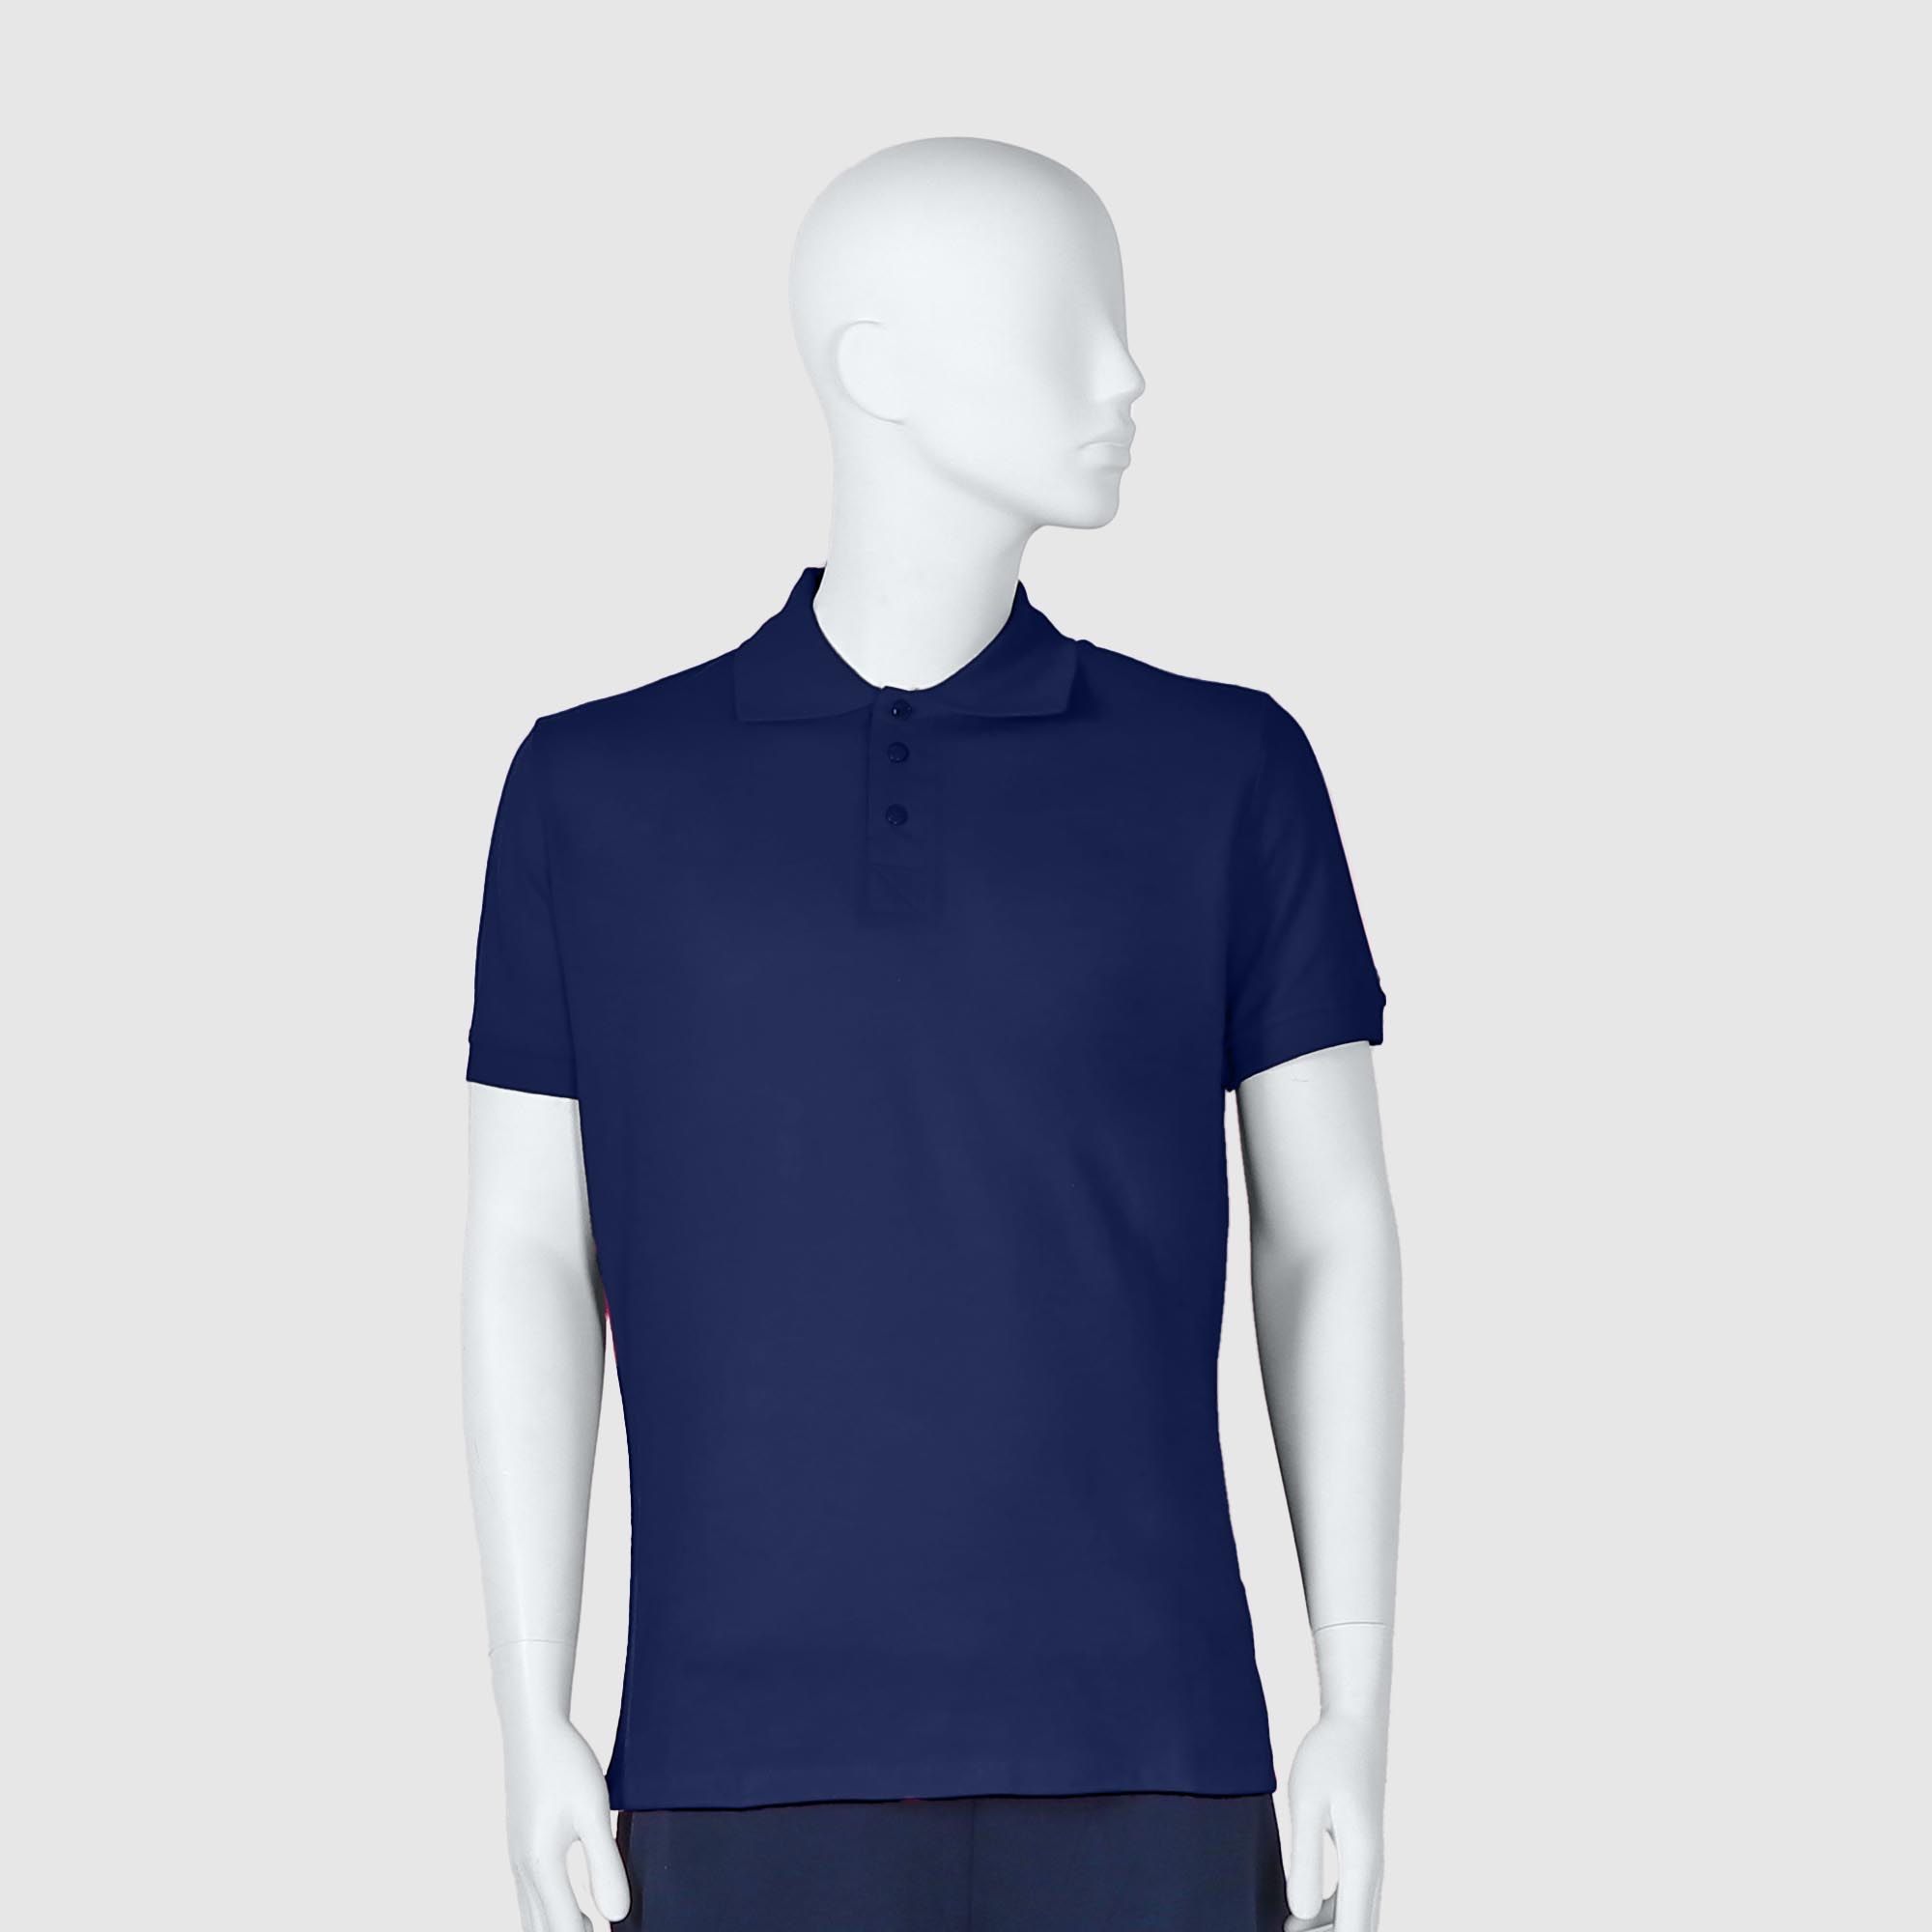 Мужская футболка-поло Diva Teks синяя (DTD-10), цвет синий, размер 44-46 - фото 1